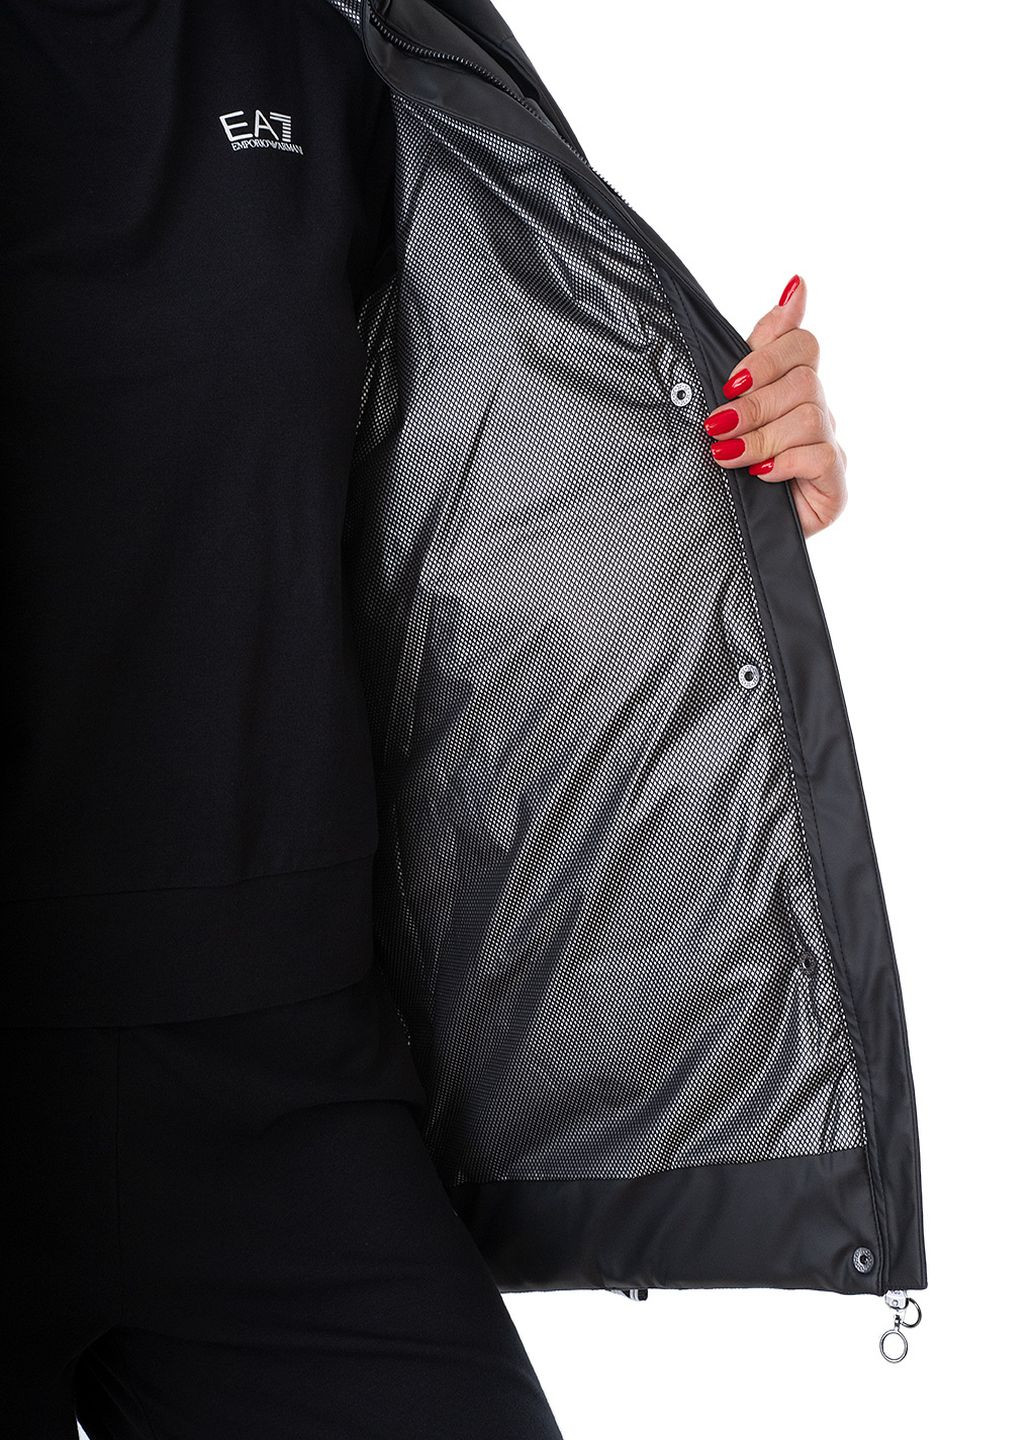 Черная зимняя куртка ARMANI EA7